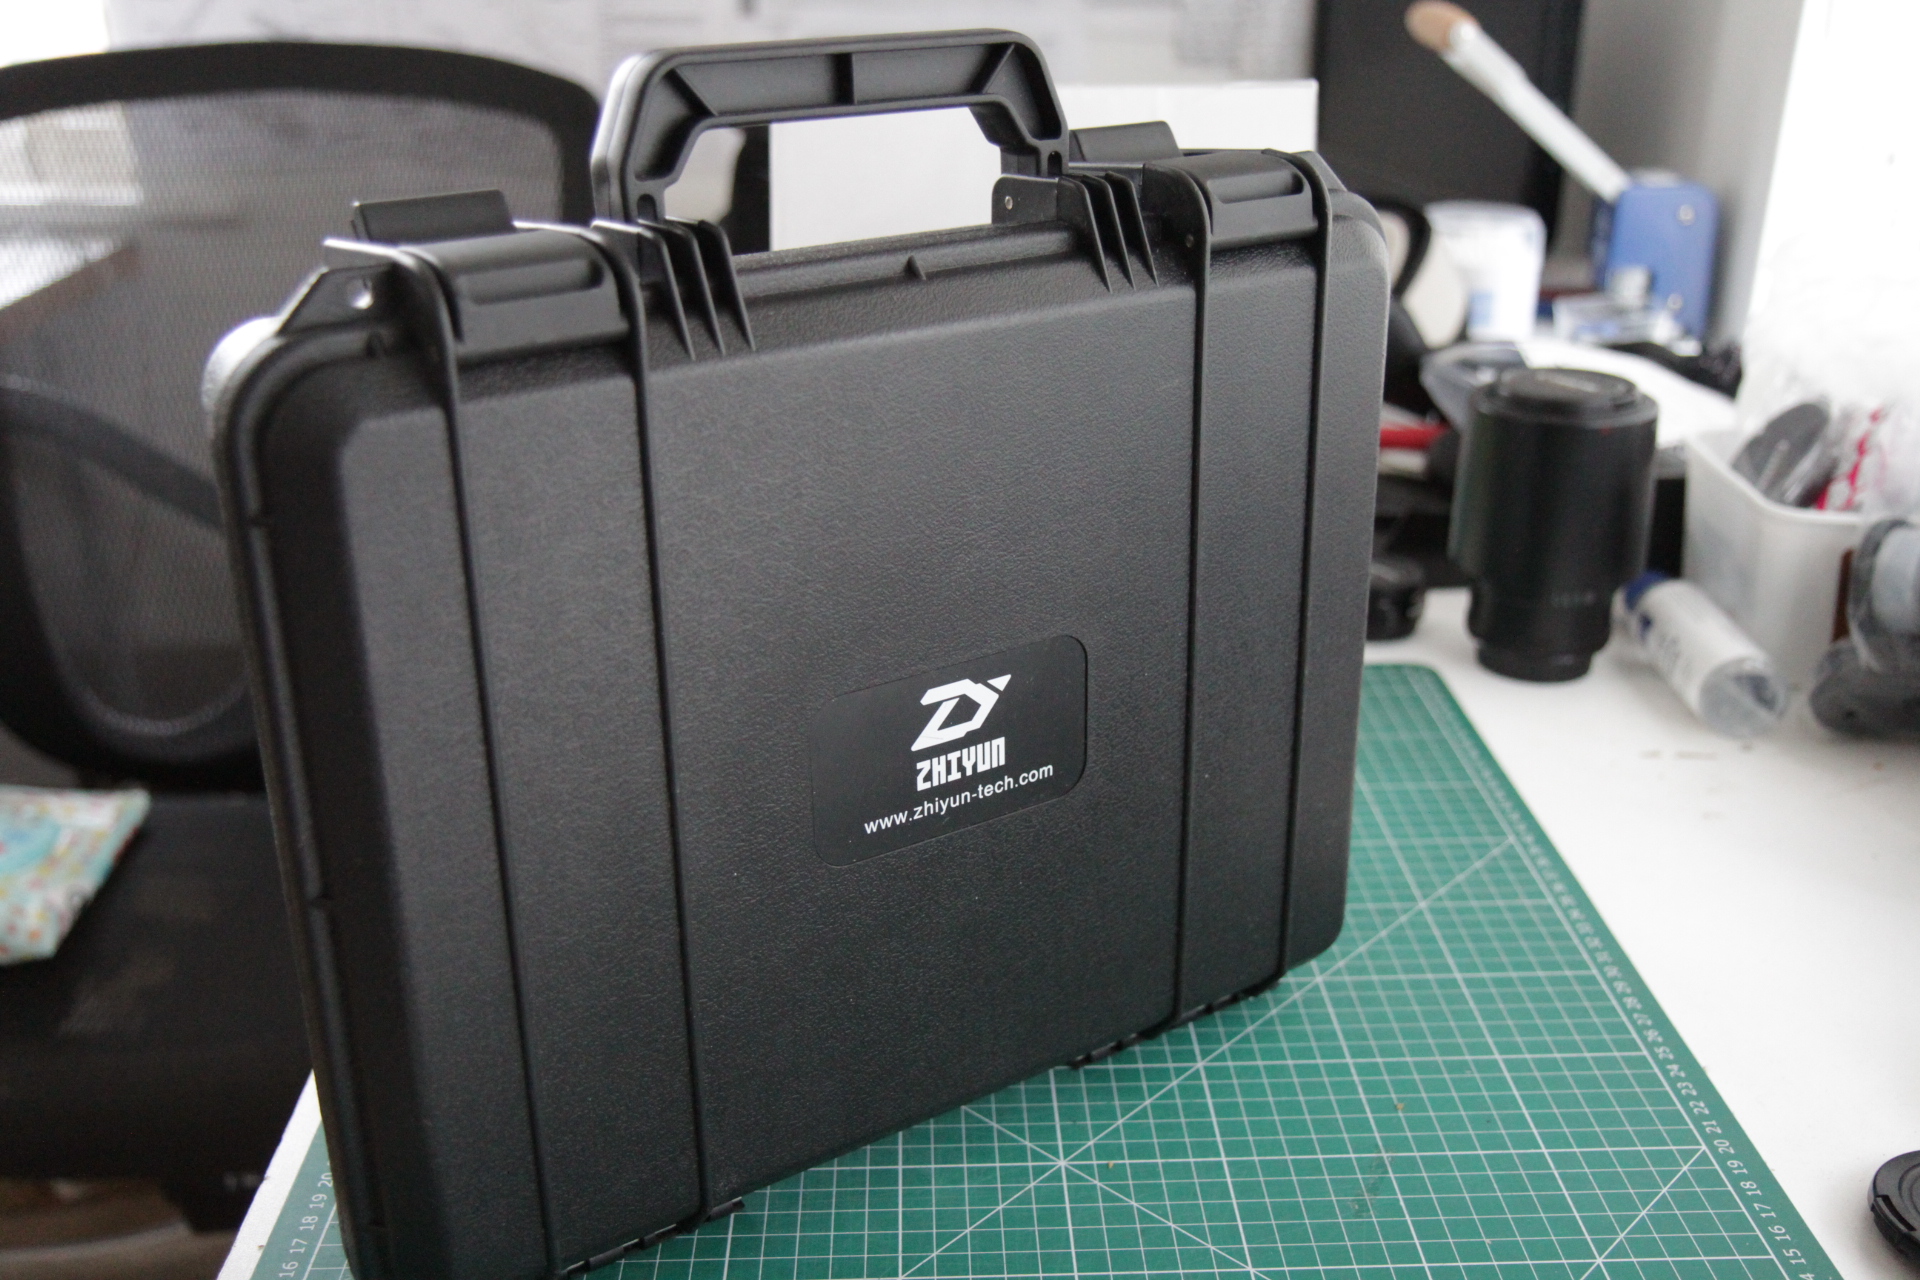 Zhiyun-Tech Crane v2 3-Axis Handheld Gimbal Stabilizer